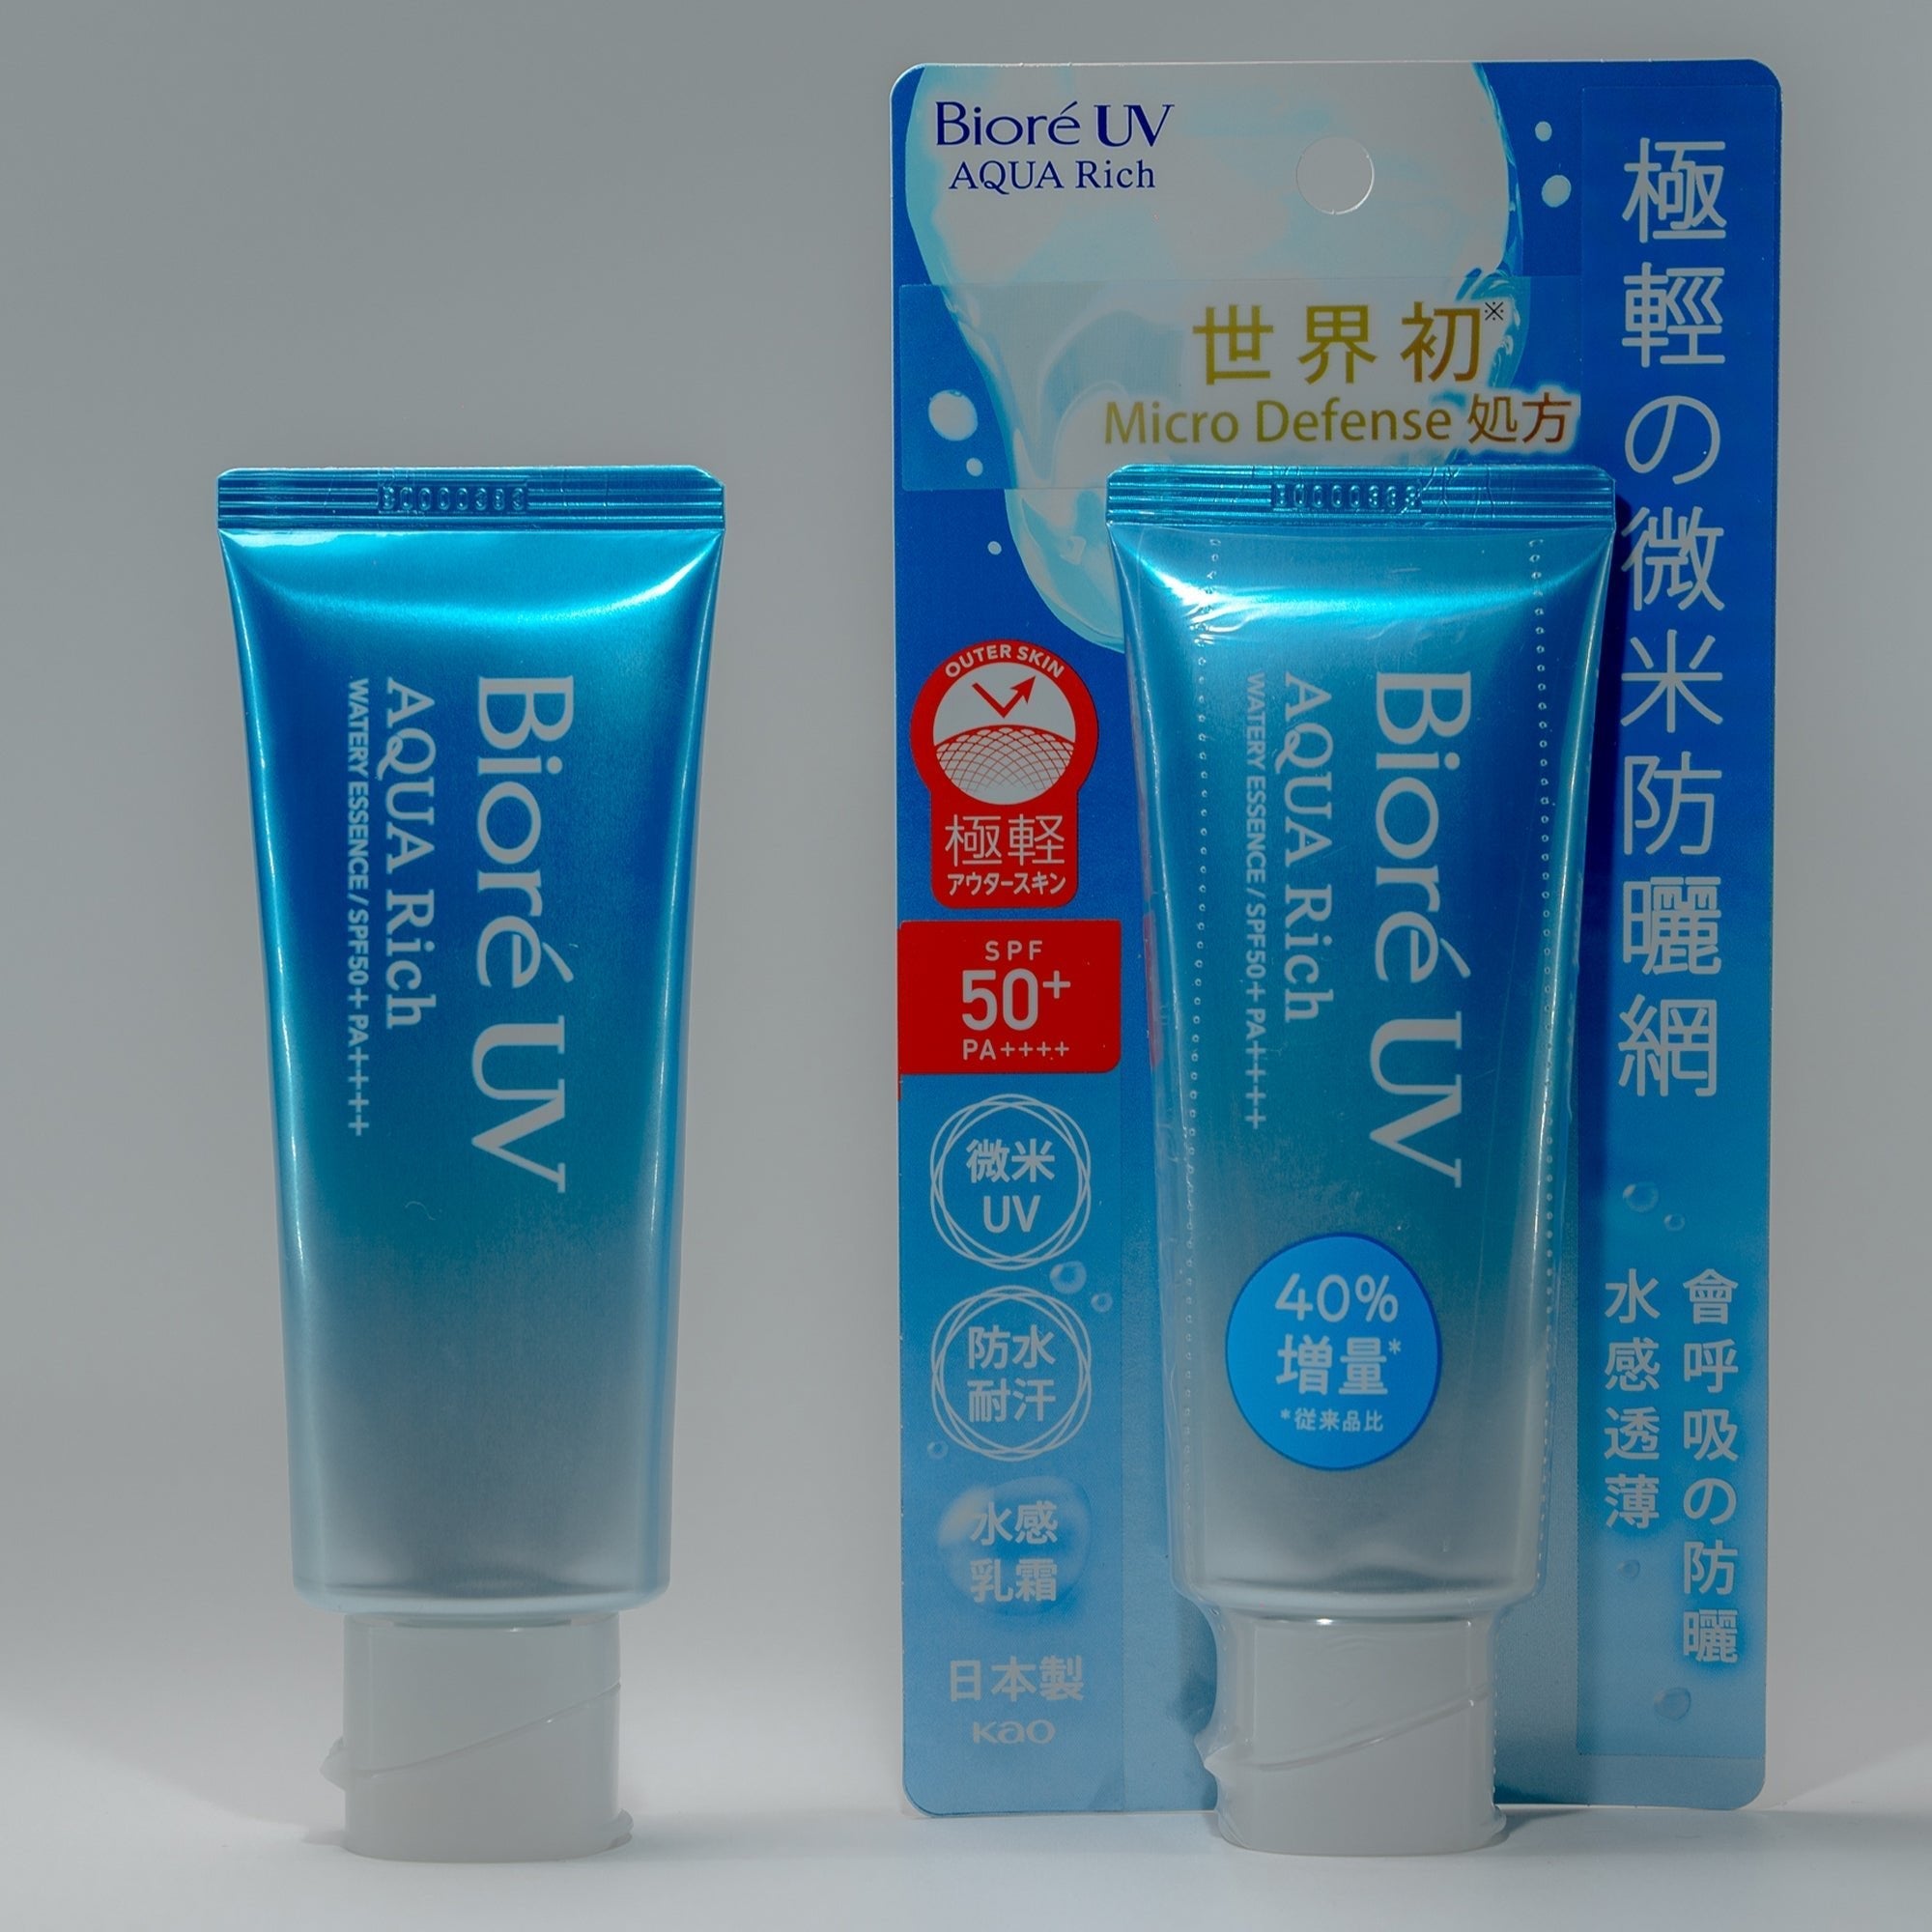 Biore Aqua Rich Watery Essence Sunscreen SPF 50+ PA++++